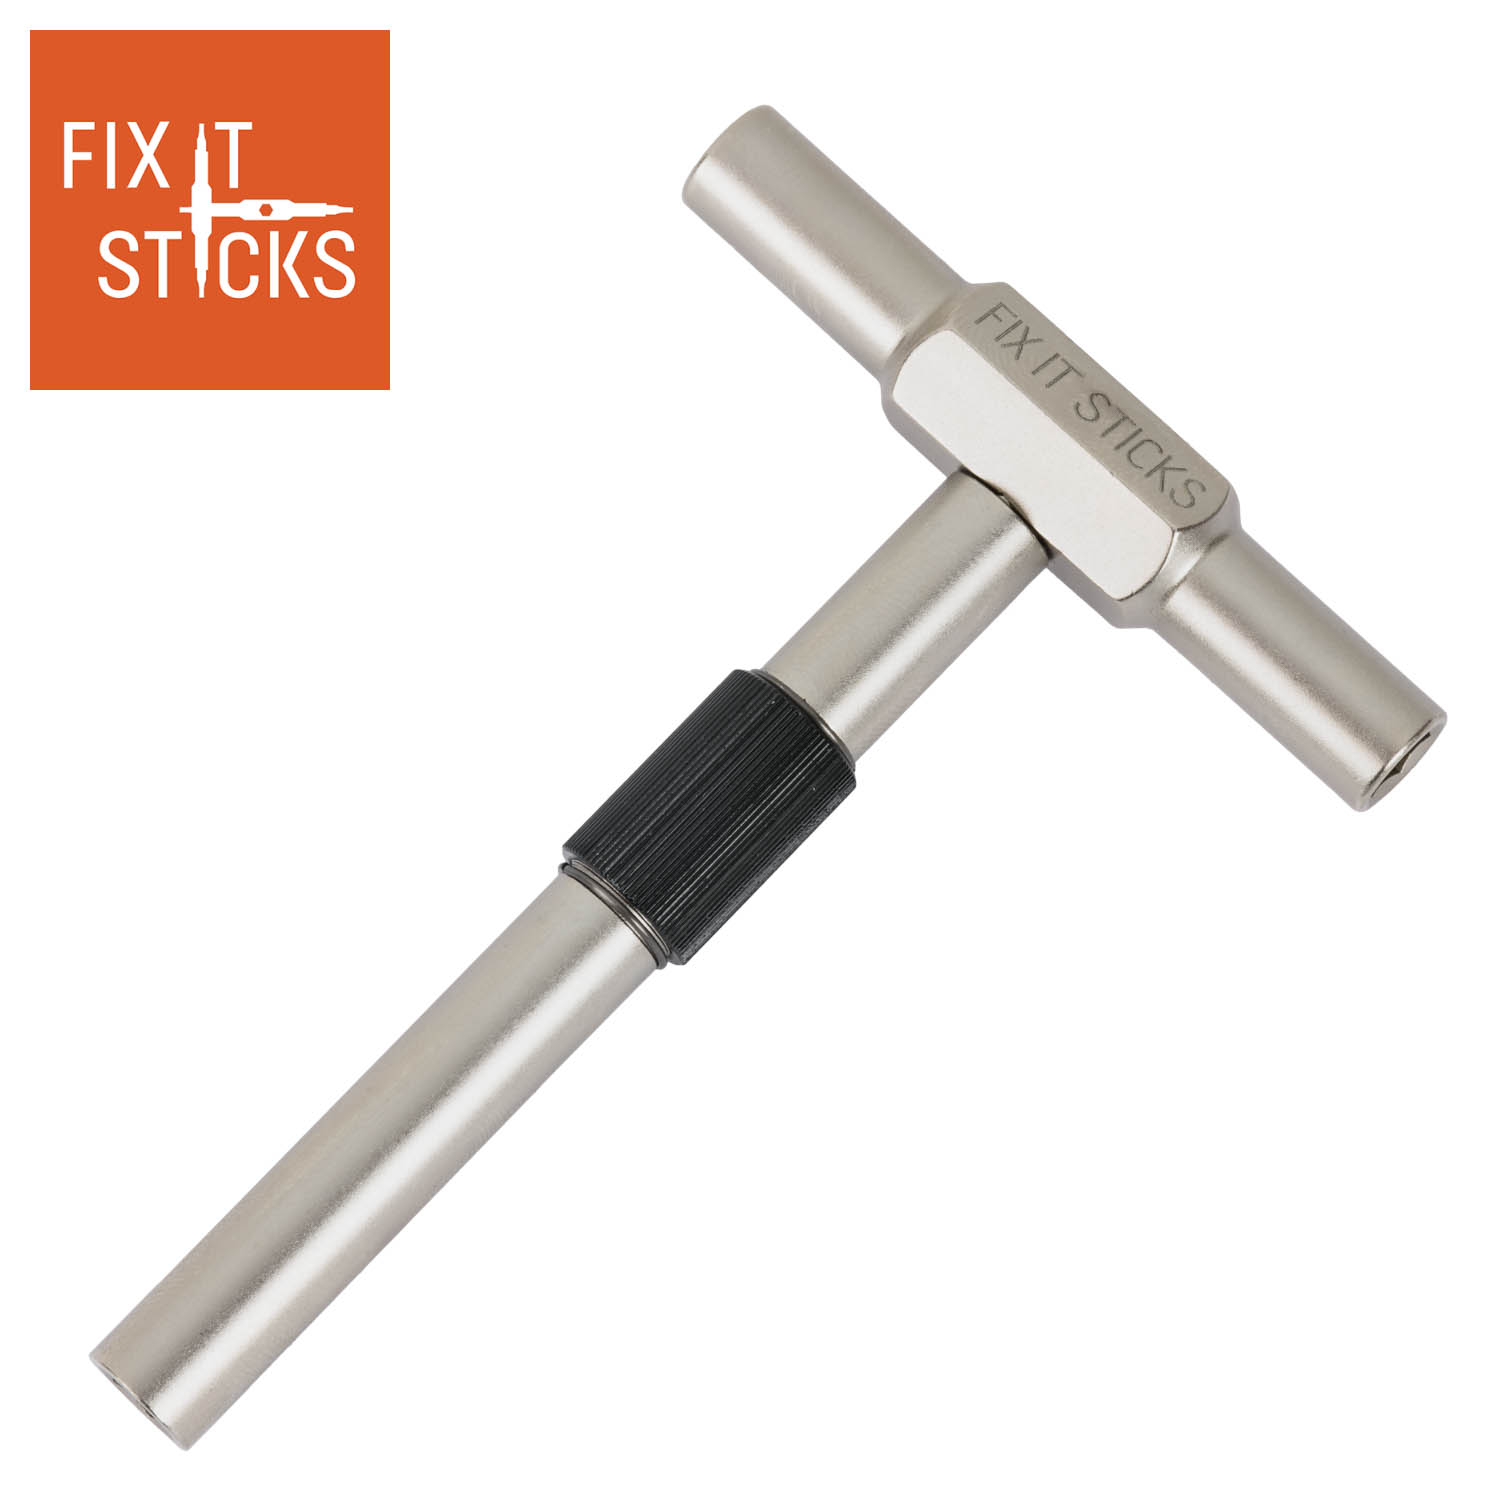 Fix It Sticks T-Way Wrench: MGW